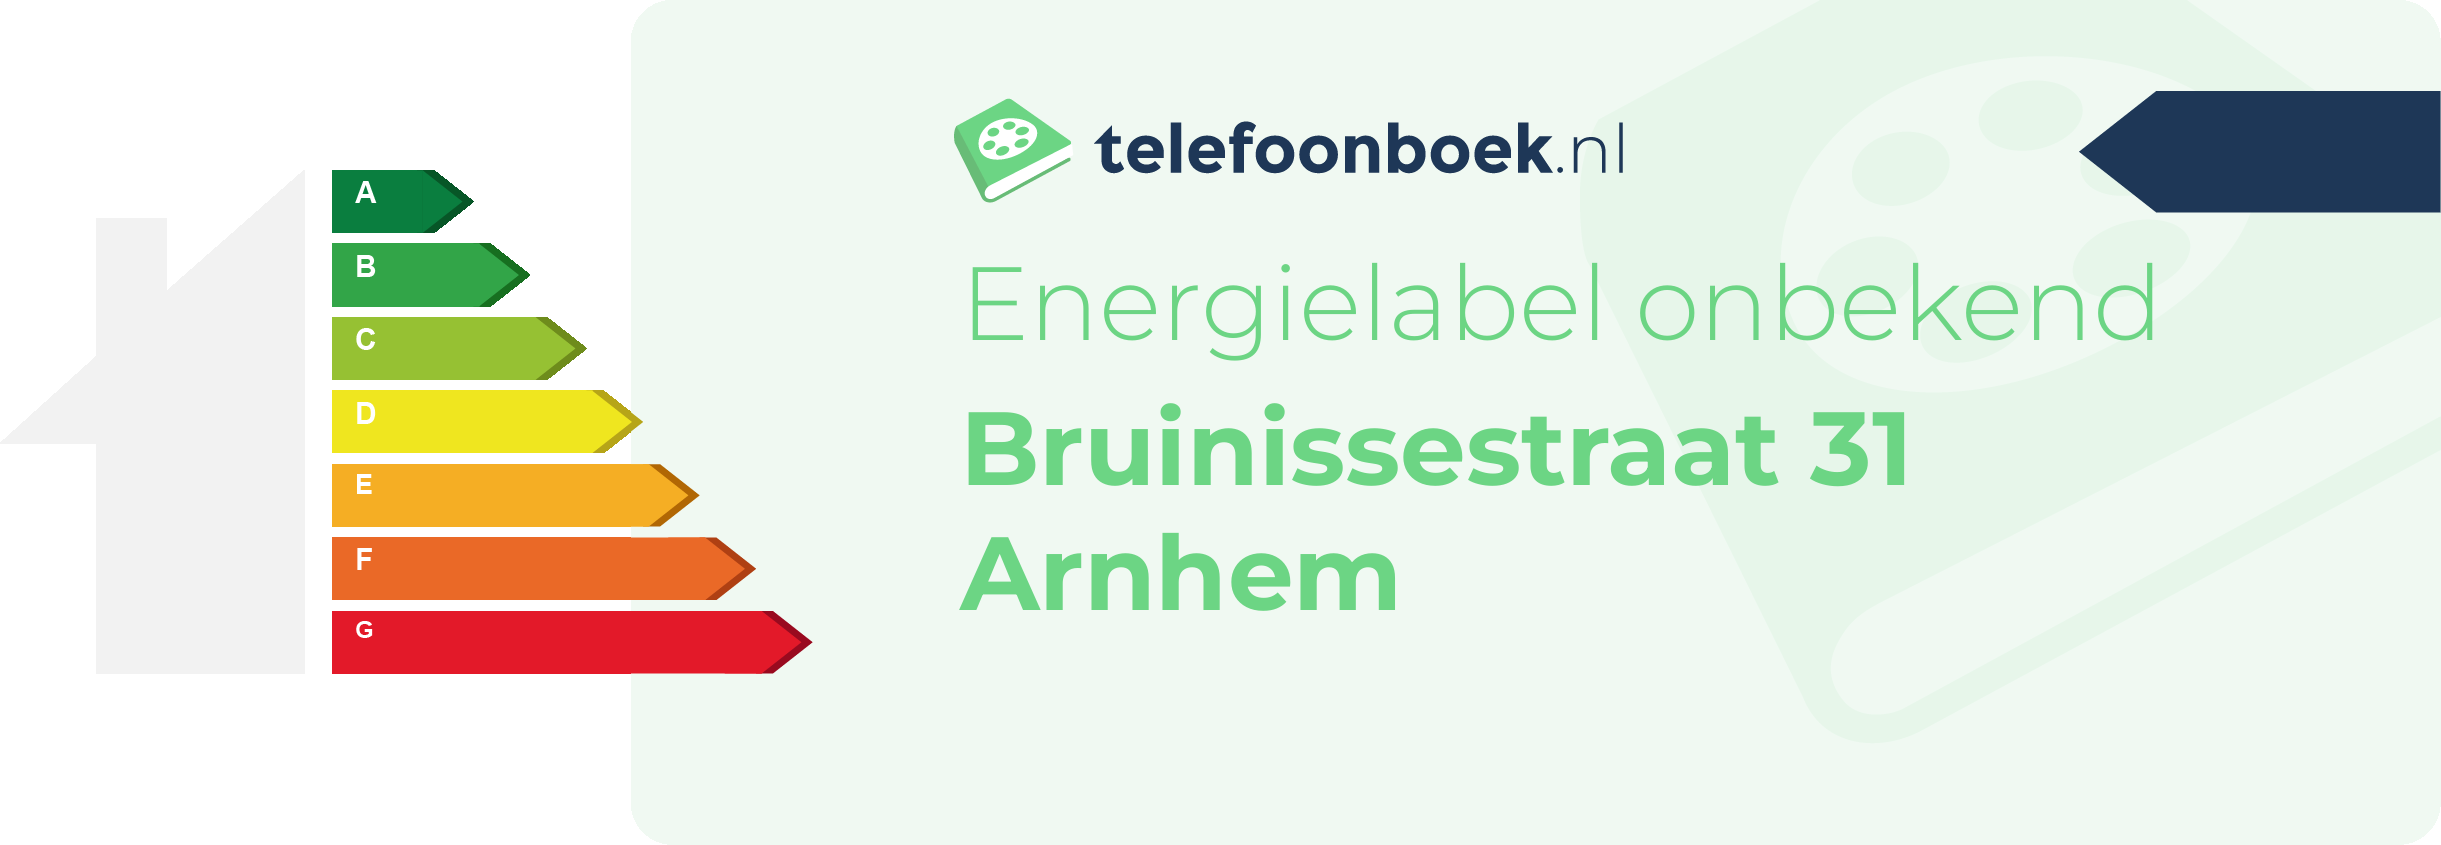 Energielabel Bruinissestraat 31 Arnhem